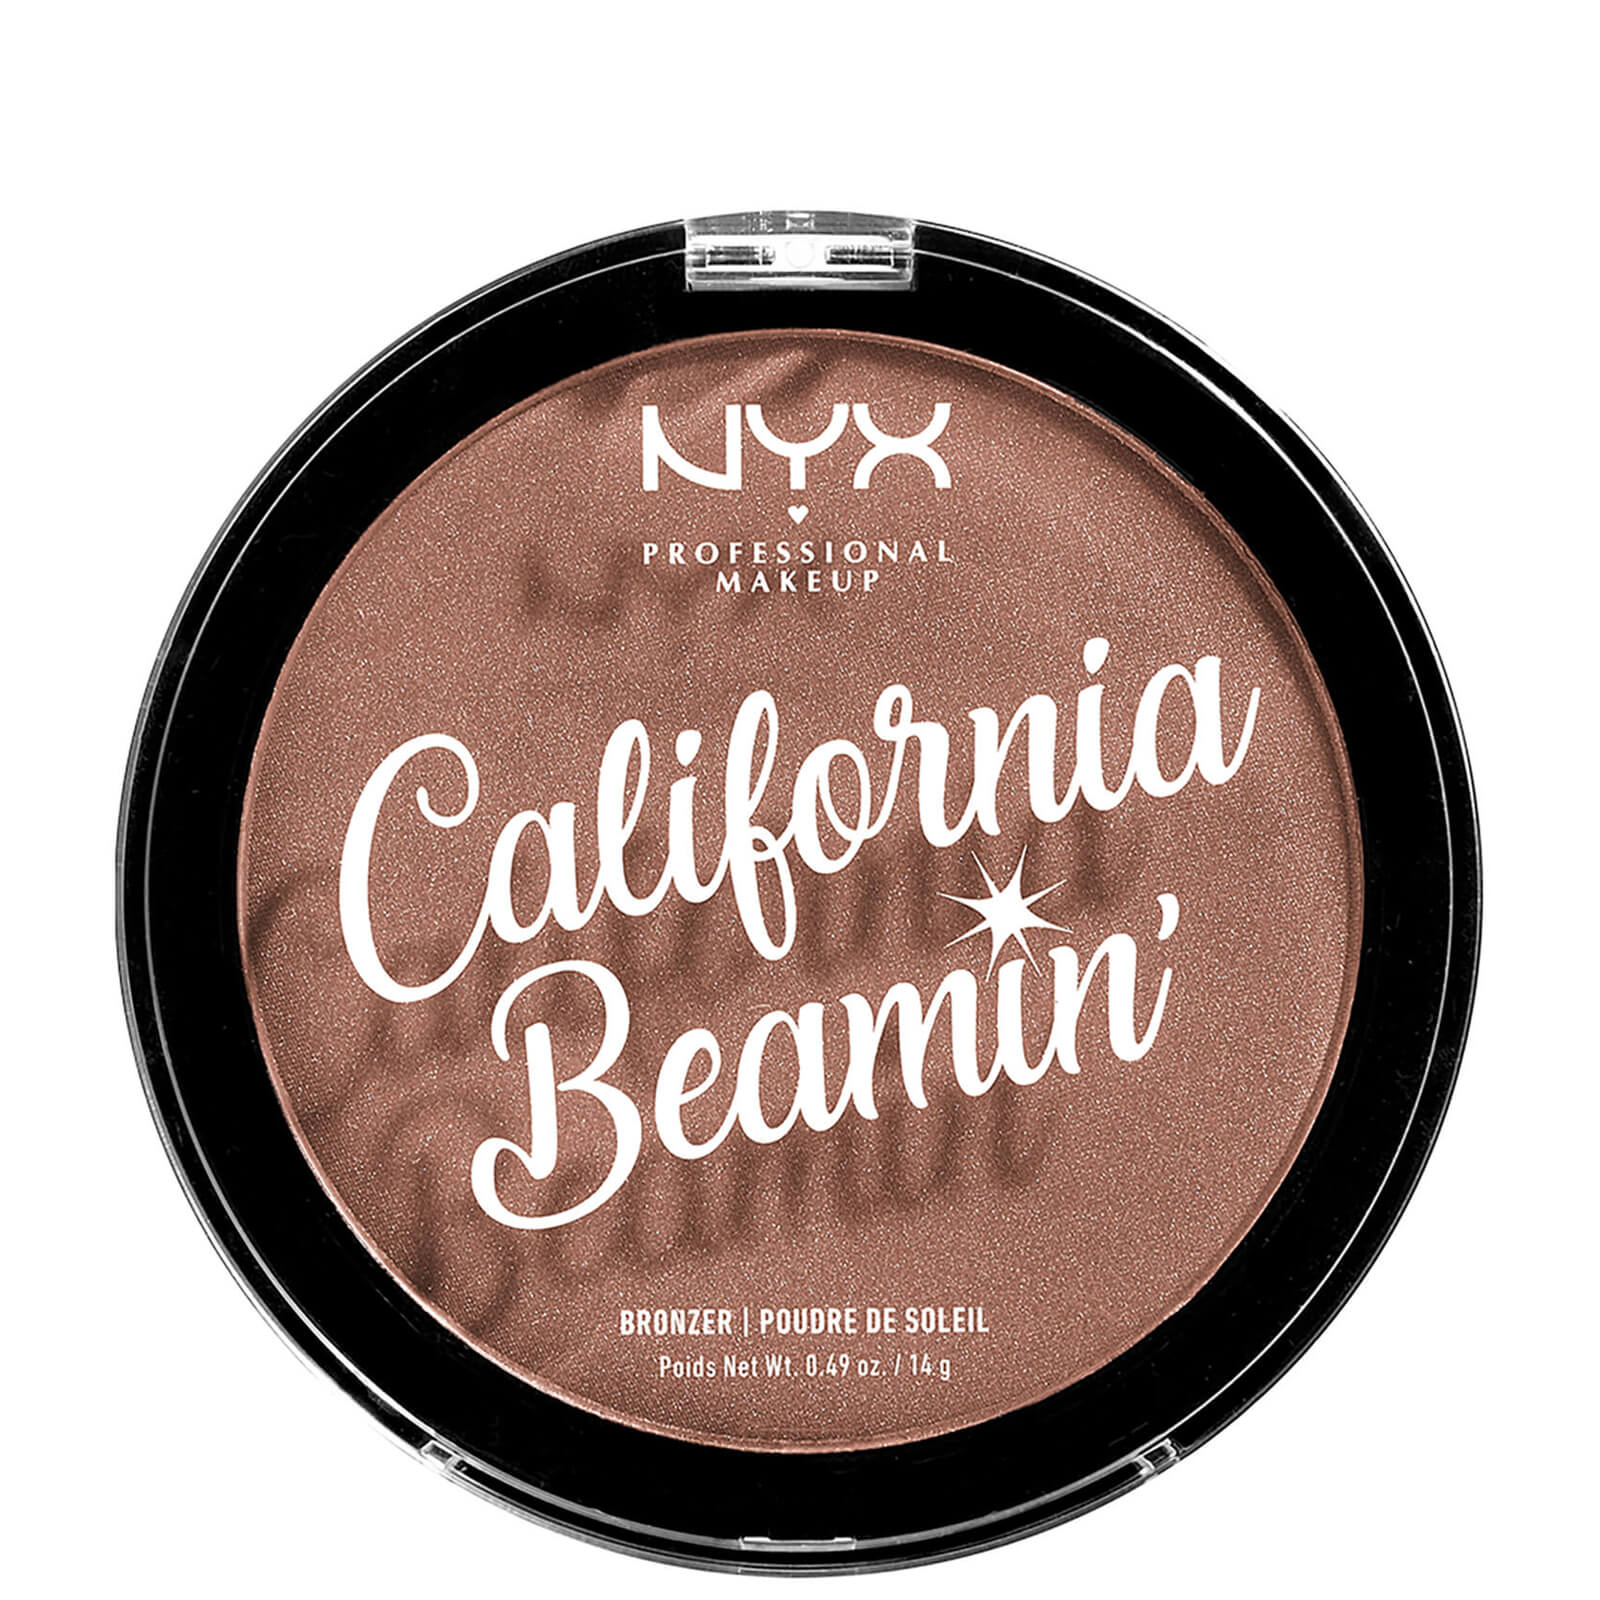 nyx professional makeup california beamin' face and body bronzer 14g (various shades) - free spirit